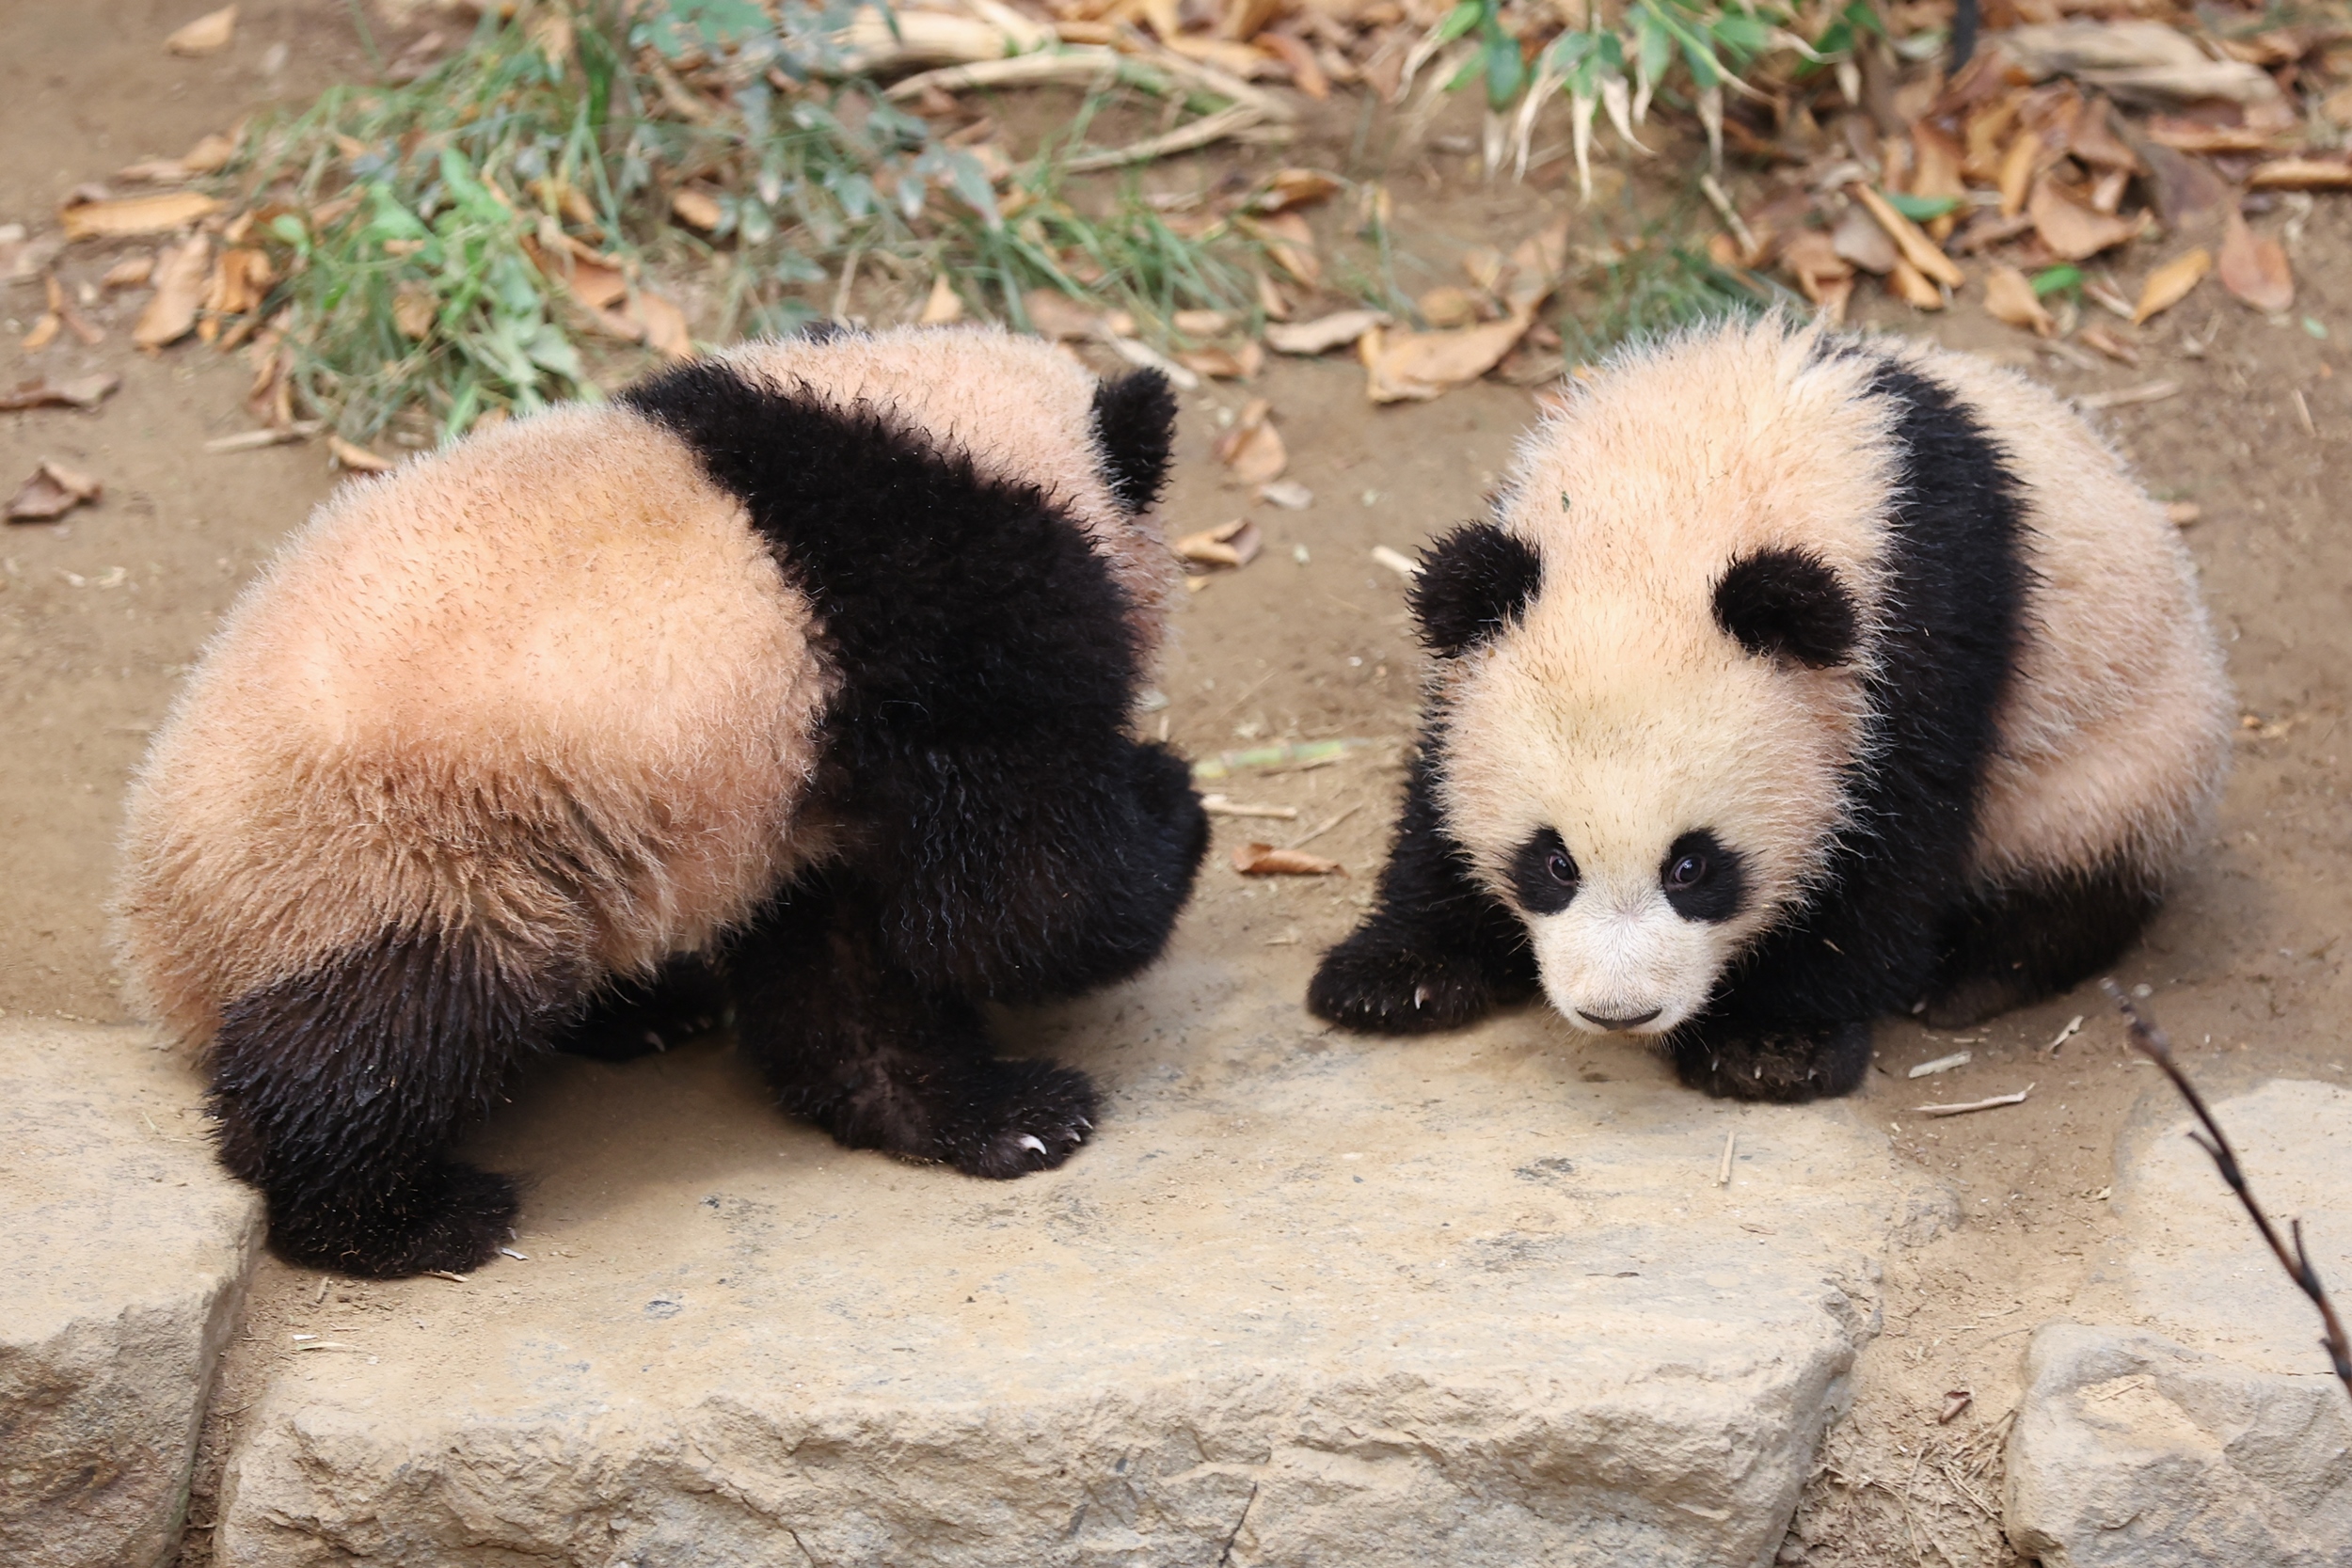 Seen from any angle, a panda cub looks cute.